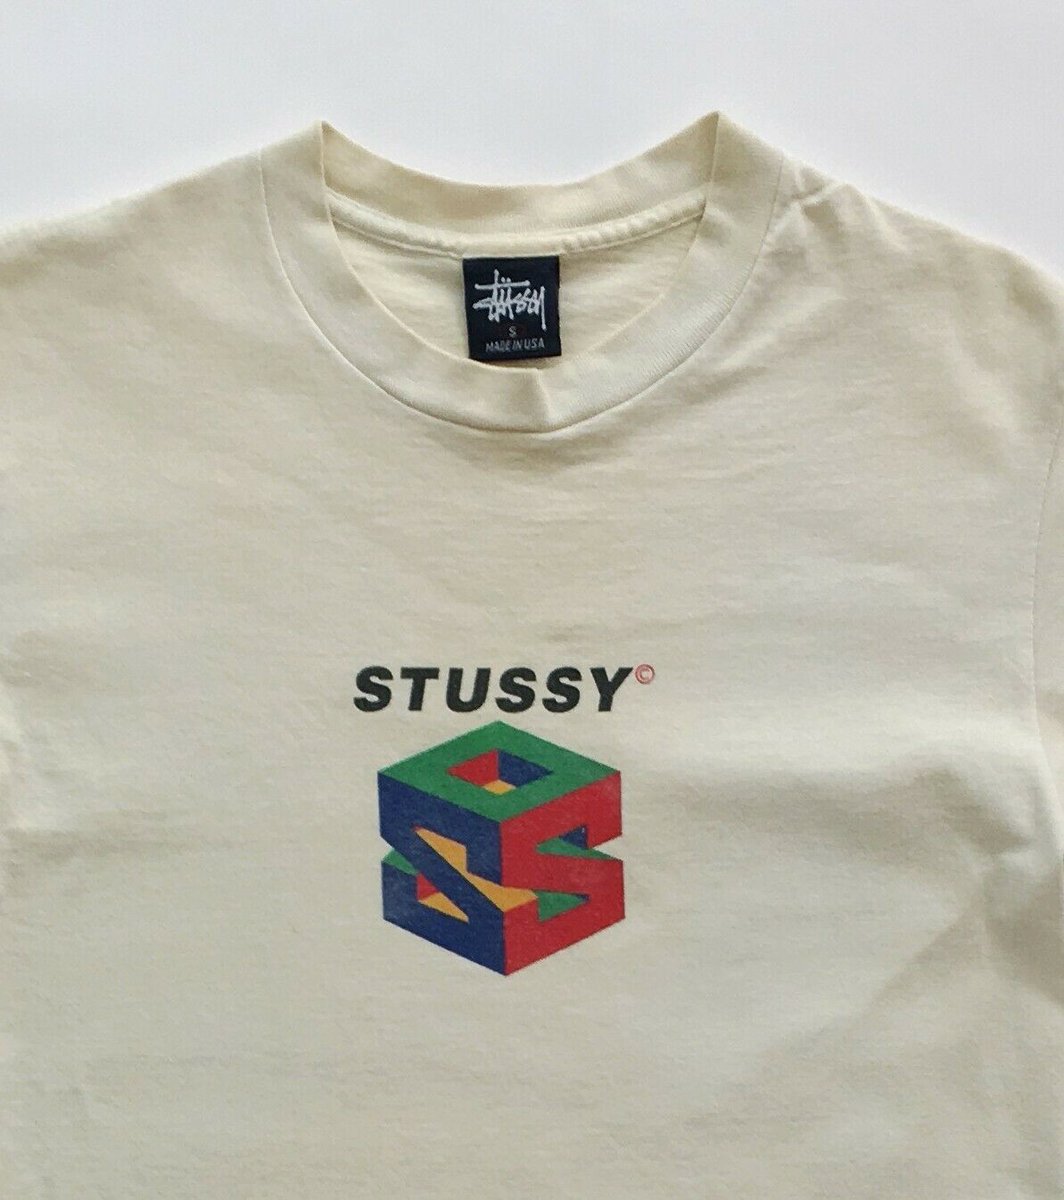 Modern Notoriety on X: Vintage Stüssy N64 and PS2 logo flip tees